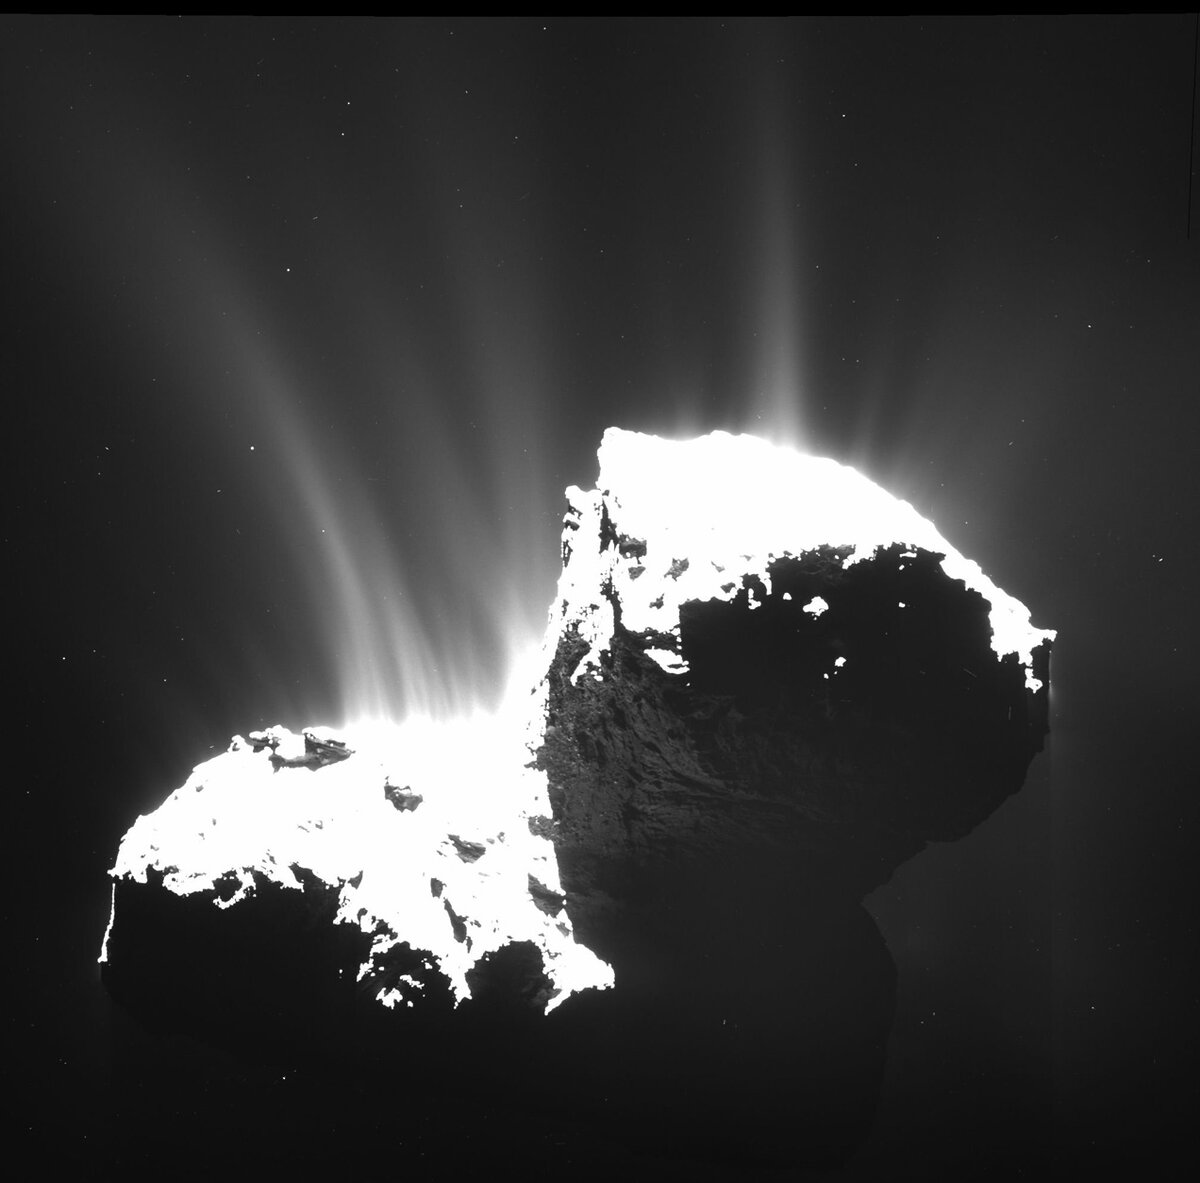 67p чурюмова герасименко. Комета Чурюмова-Герасименко. Комета 67p/Чурюмова-Герасименко Rosetta. Comet 67p/Churyumov.